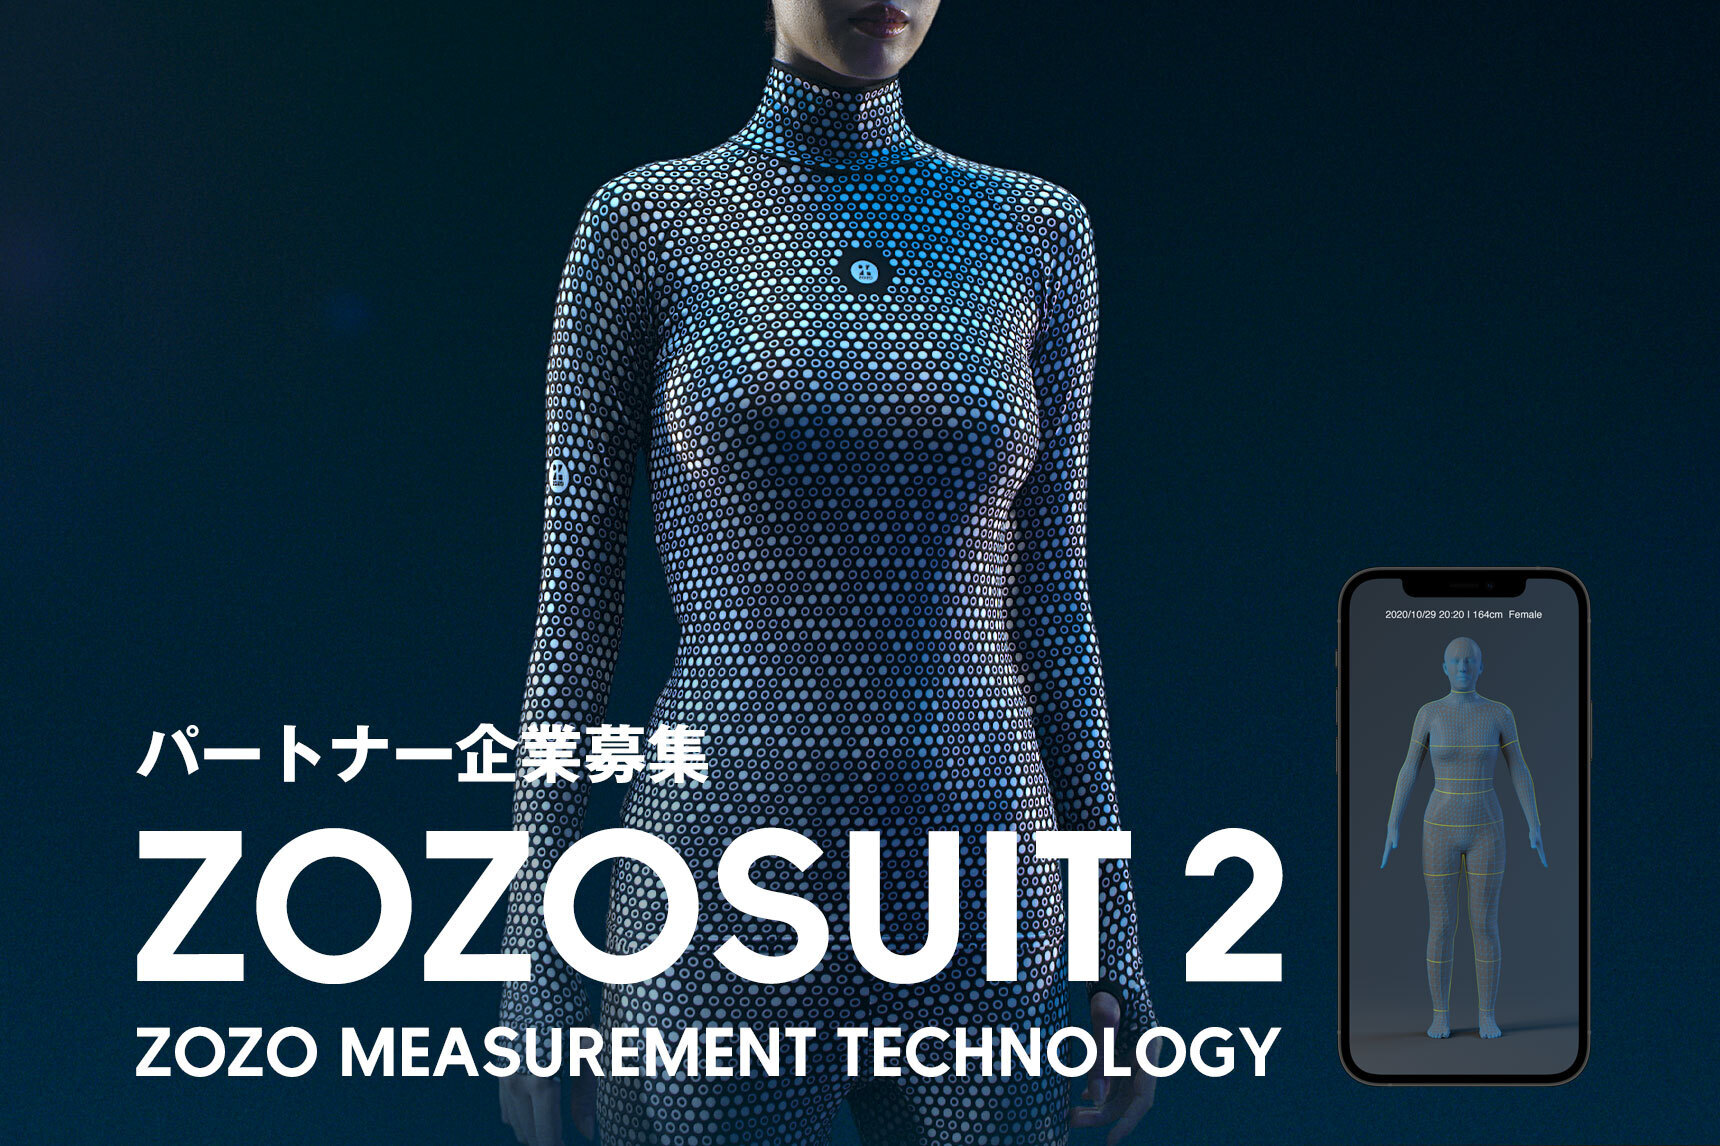 3D計測用ボディースーツ「ZOZOSUIT 2」を発表 ZOZOSUIT  2・ZOZOMATの計測テクノロジーを活用した新サービス共創のパートナー企業を募集 - 株式会社ZOZO